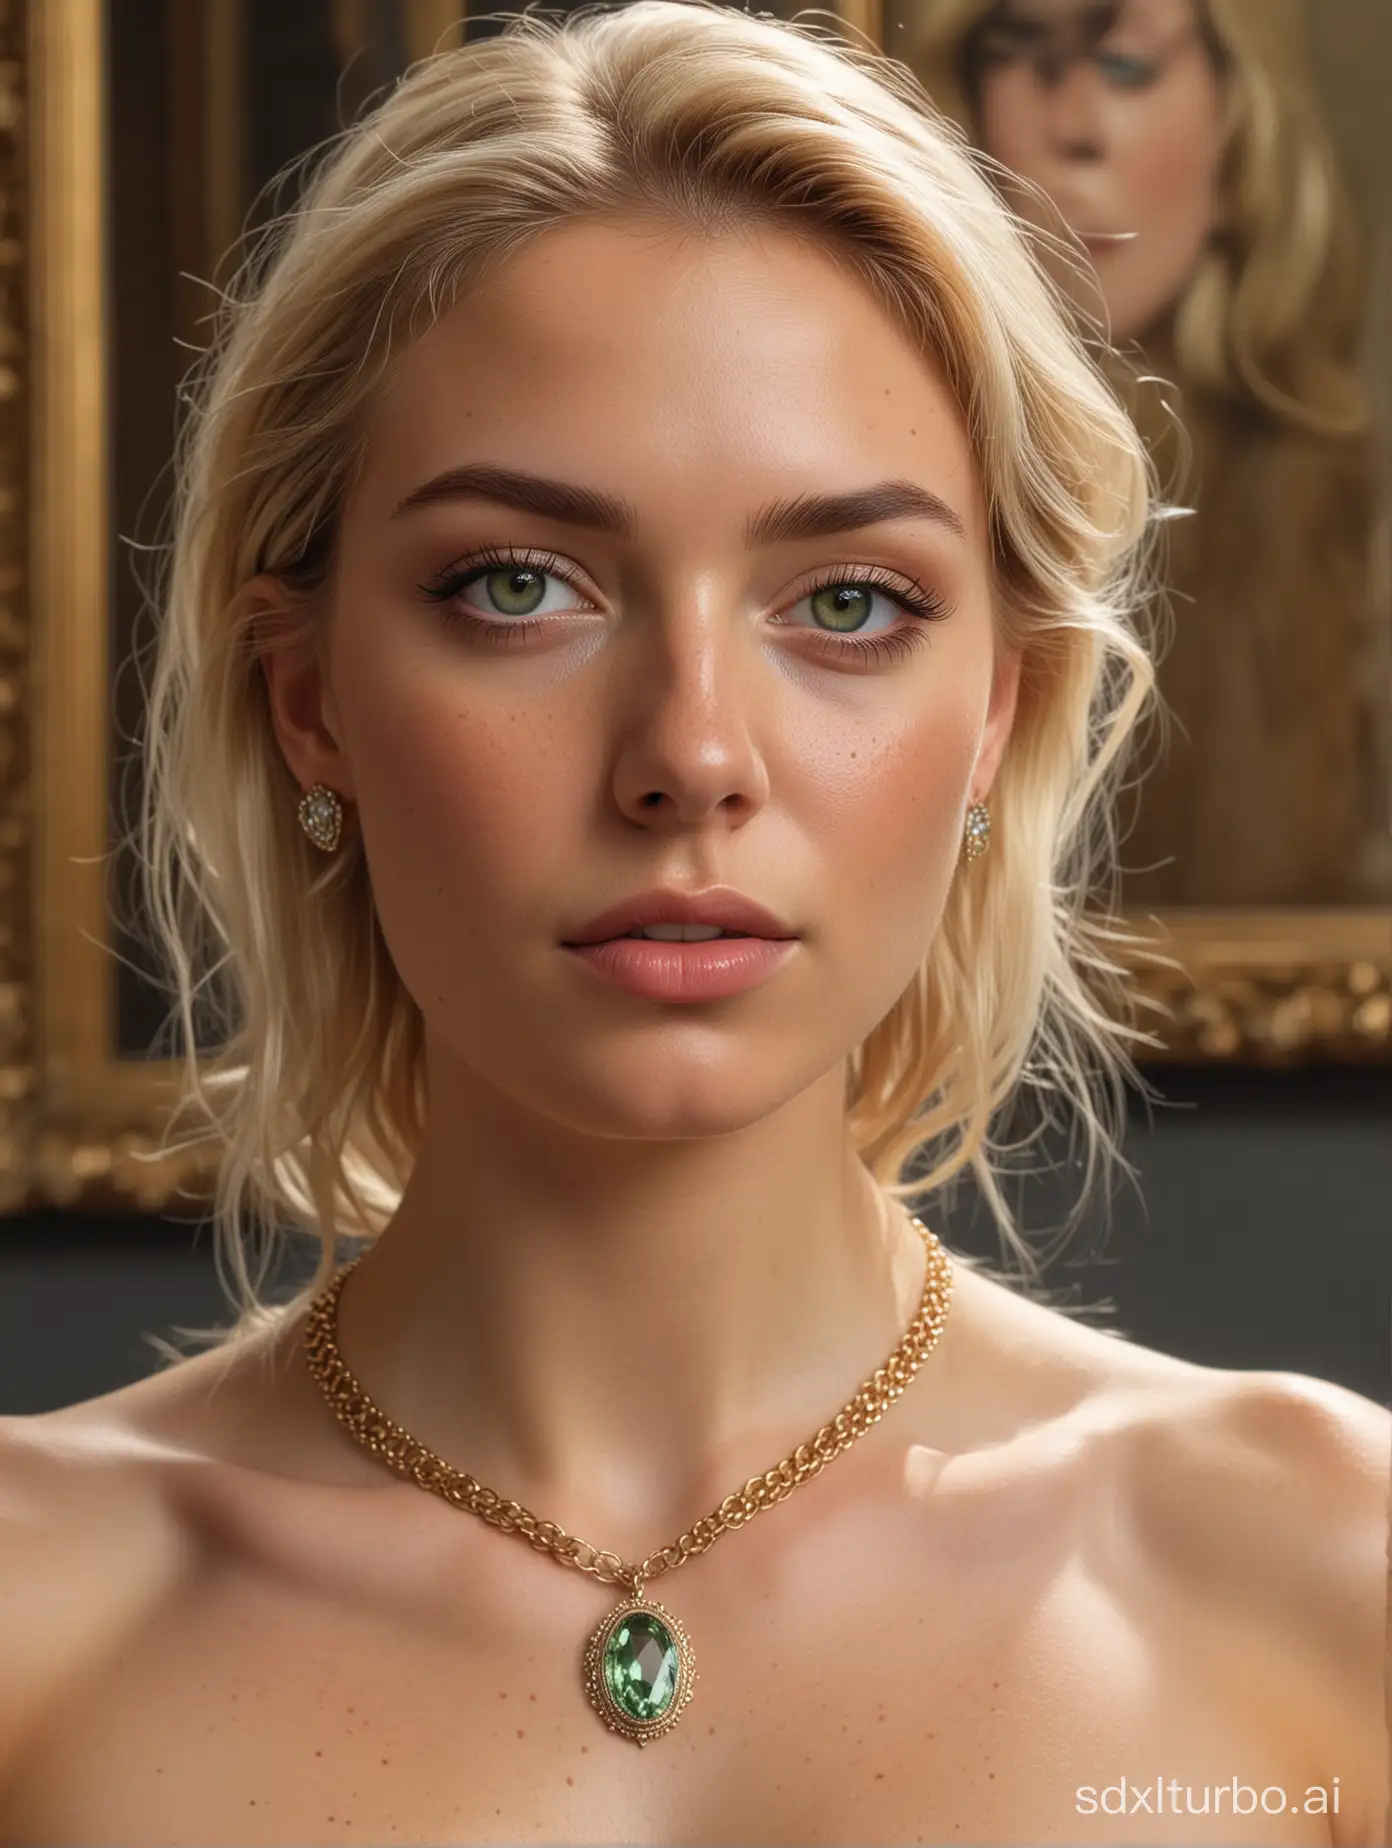 elegant woman in art gallery, blonde, portrait, nude, green eyes, 4k, ultra detailed, masterpiece, necklace, luxurious, skin texture, freckles